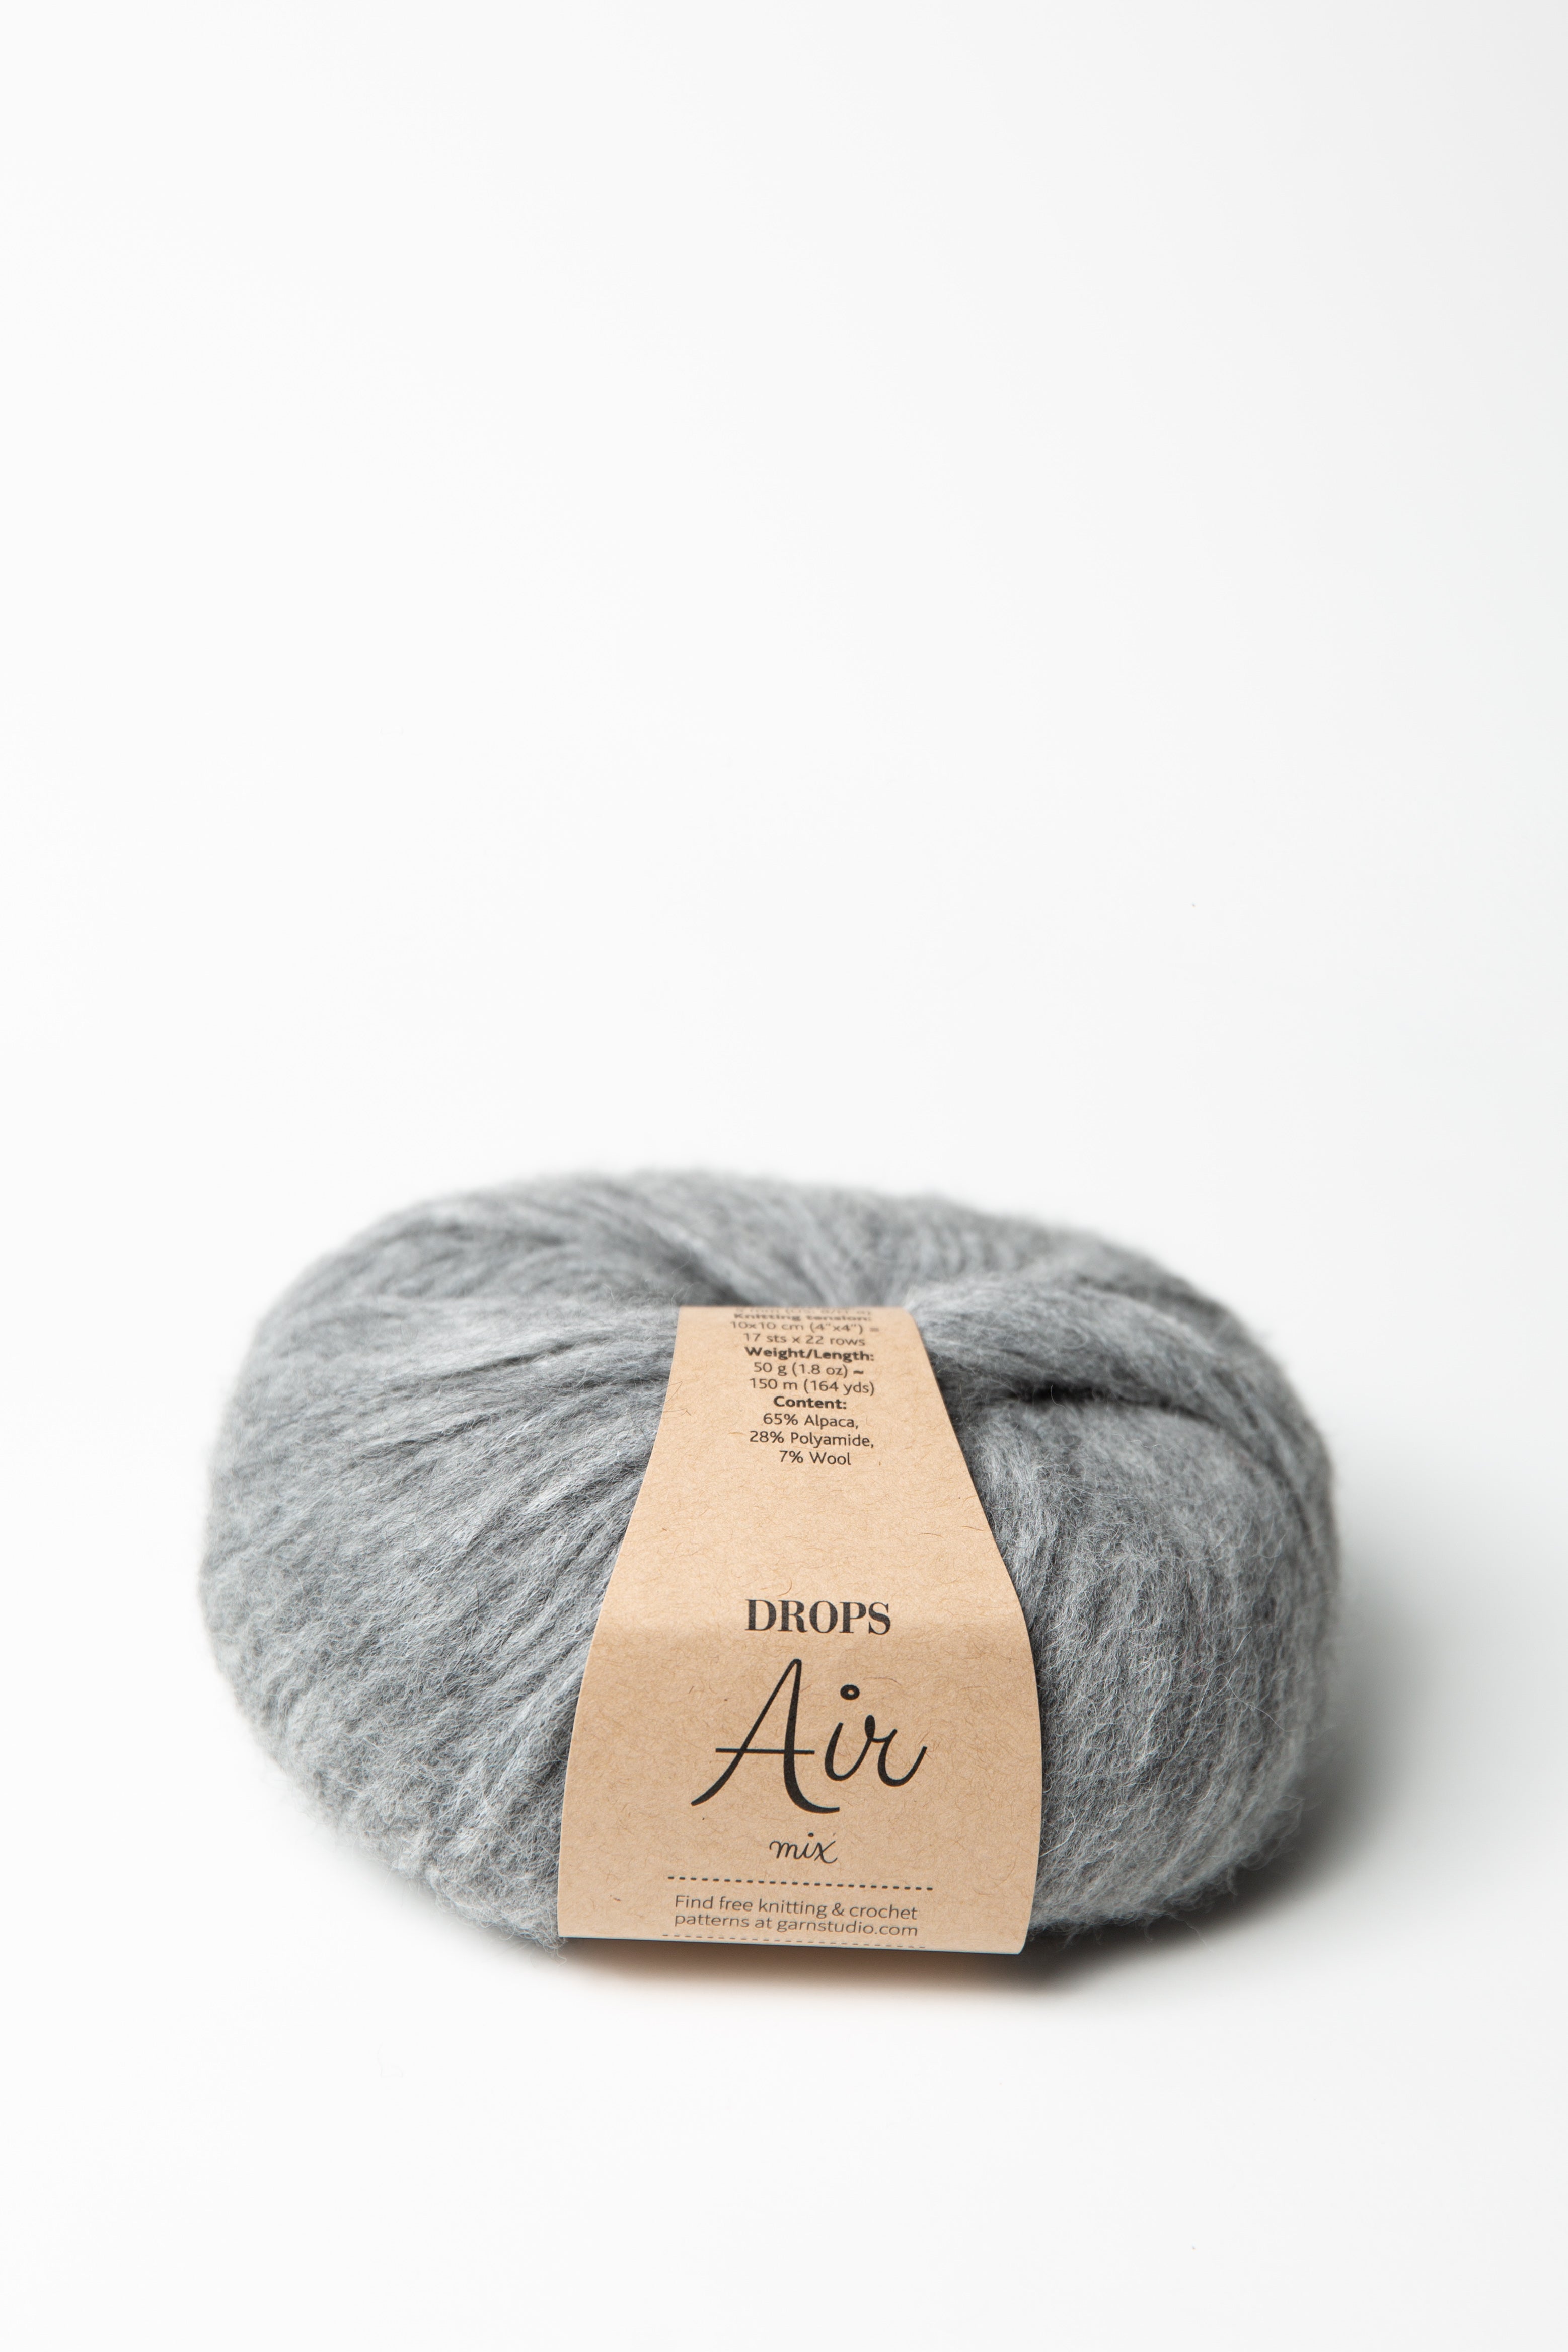 Air Drops  Shop Yarn Online Today - Beehive Wool Shop